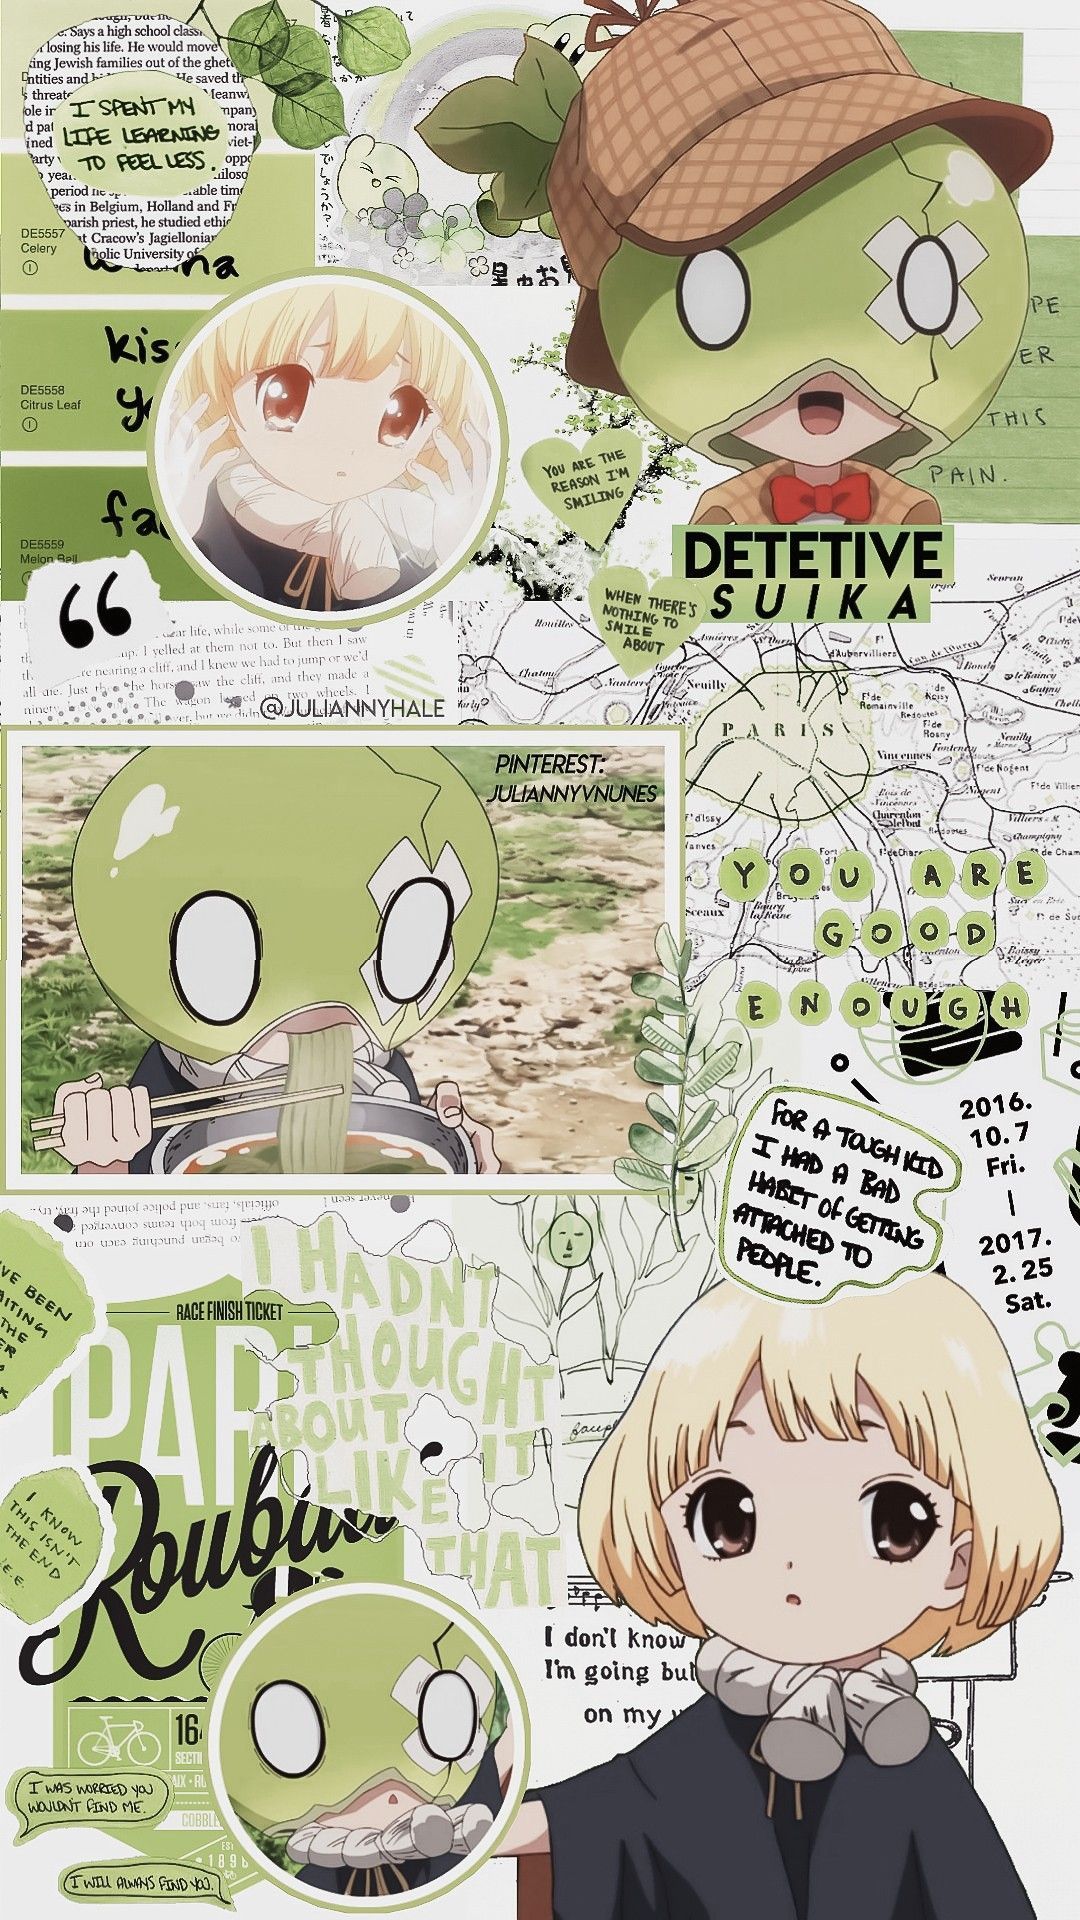 Dr. Stone. Suika. Cute anime wallpaper, Aesthetic anime, Anime